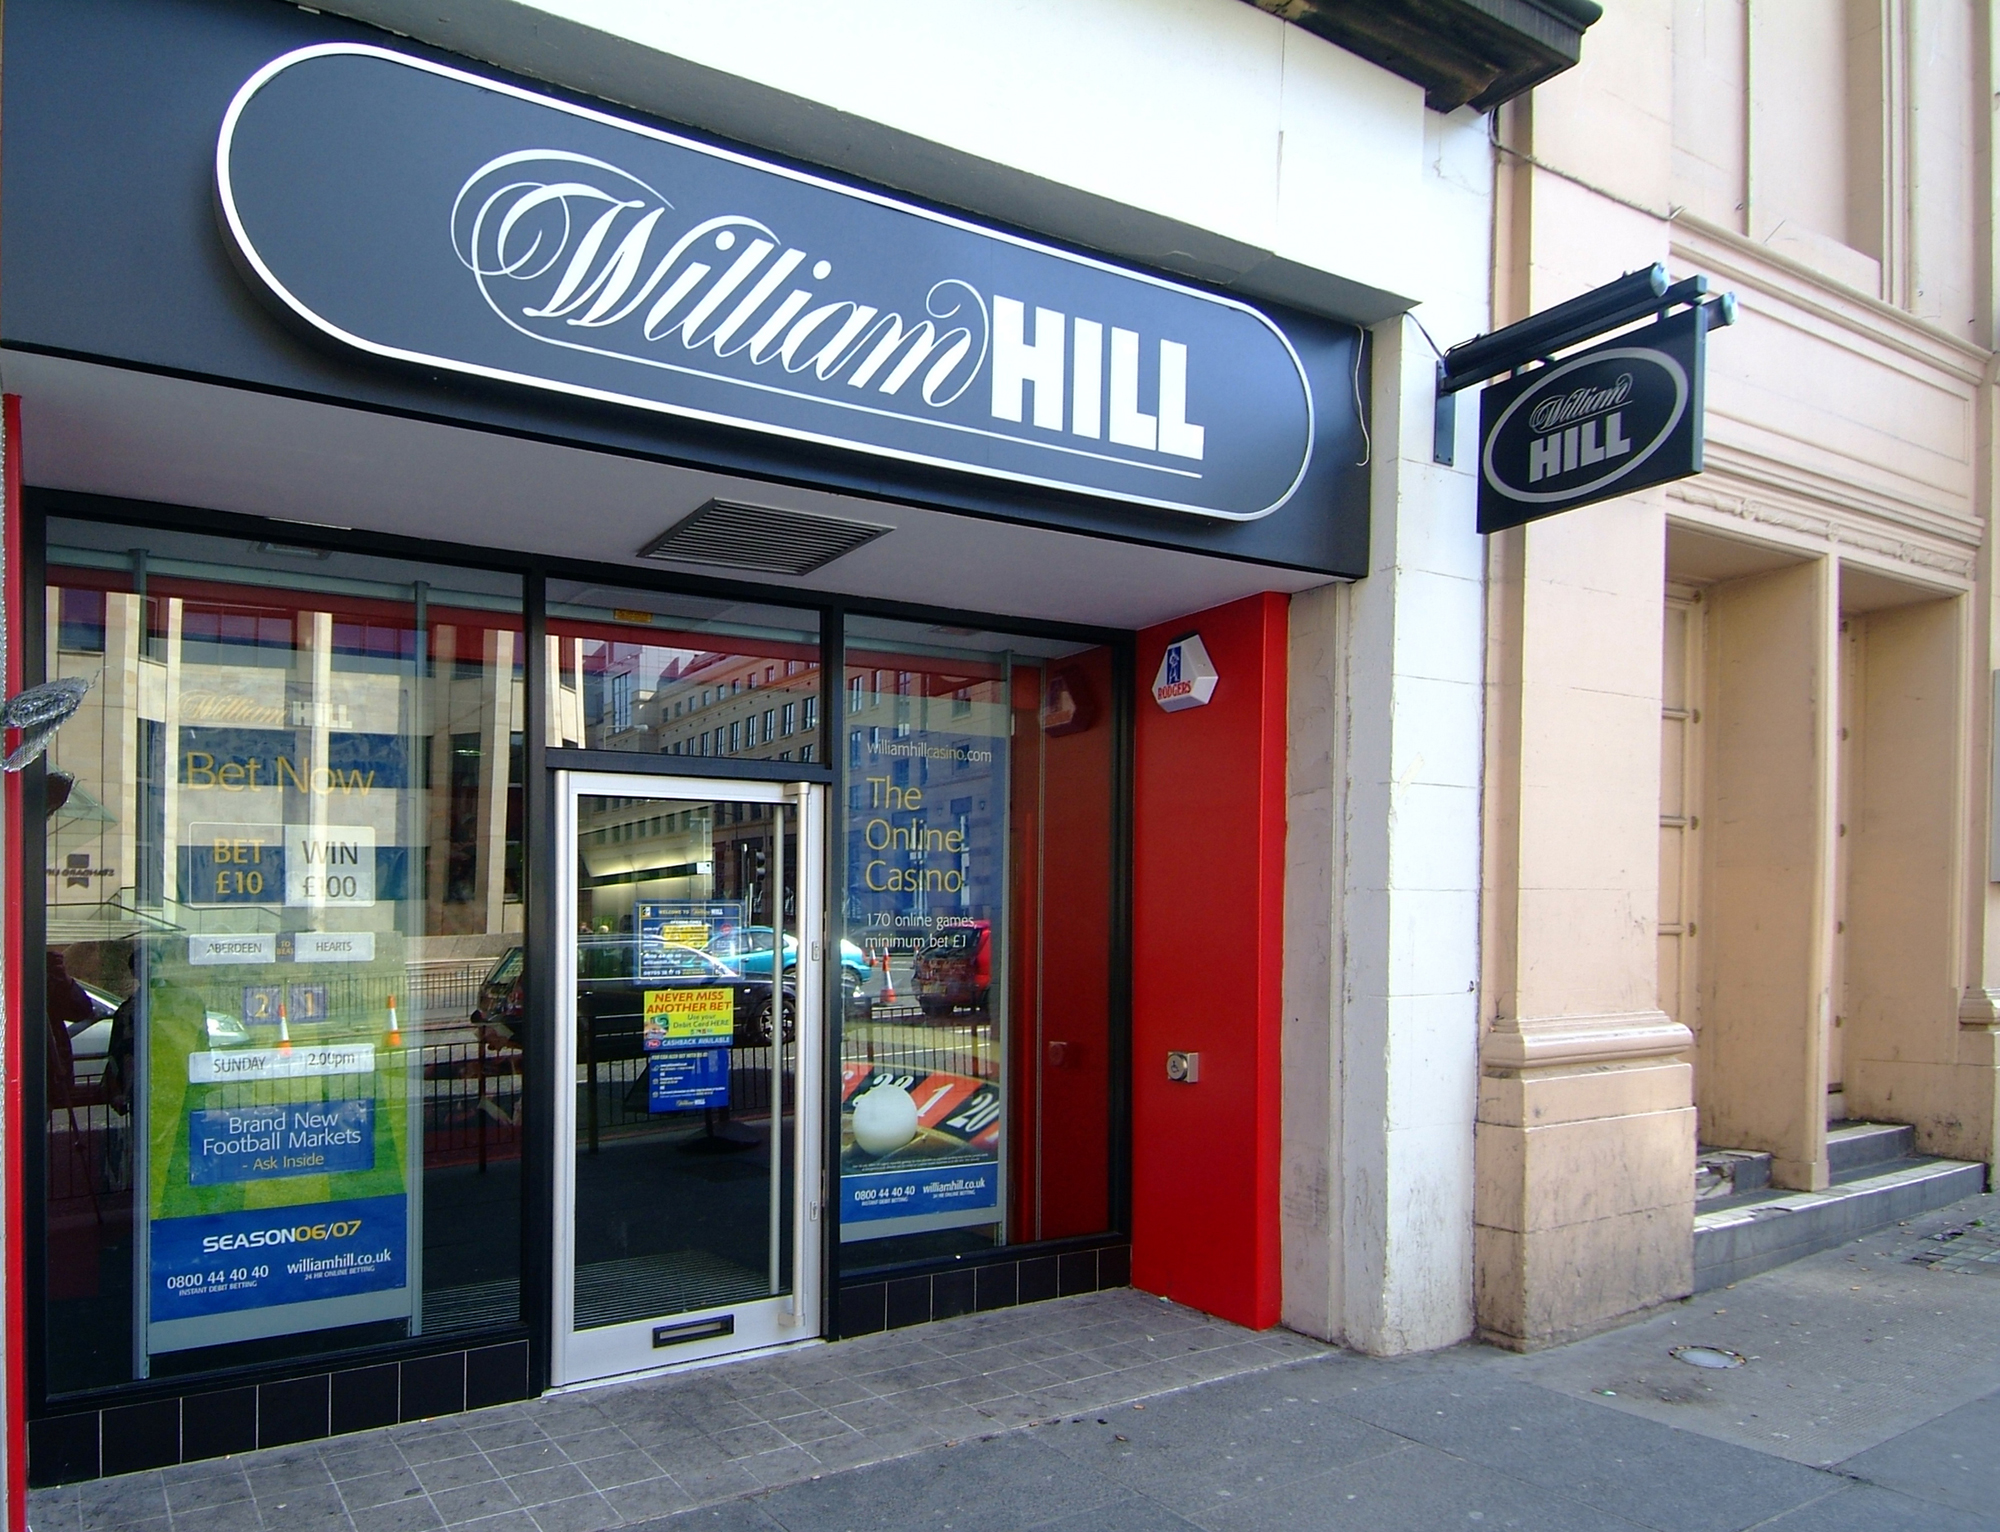 Will hill. William Hill букмекерская контора. Английские букмекерские конторы. William Hill букмекерская контора лого. William Hill первая контора.